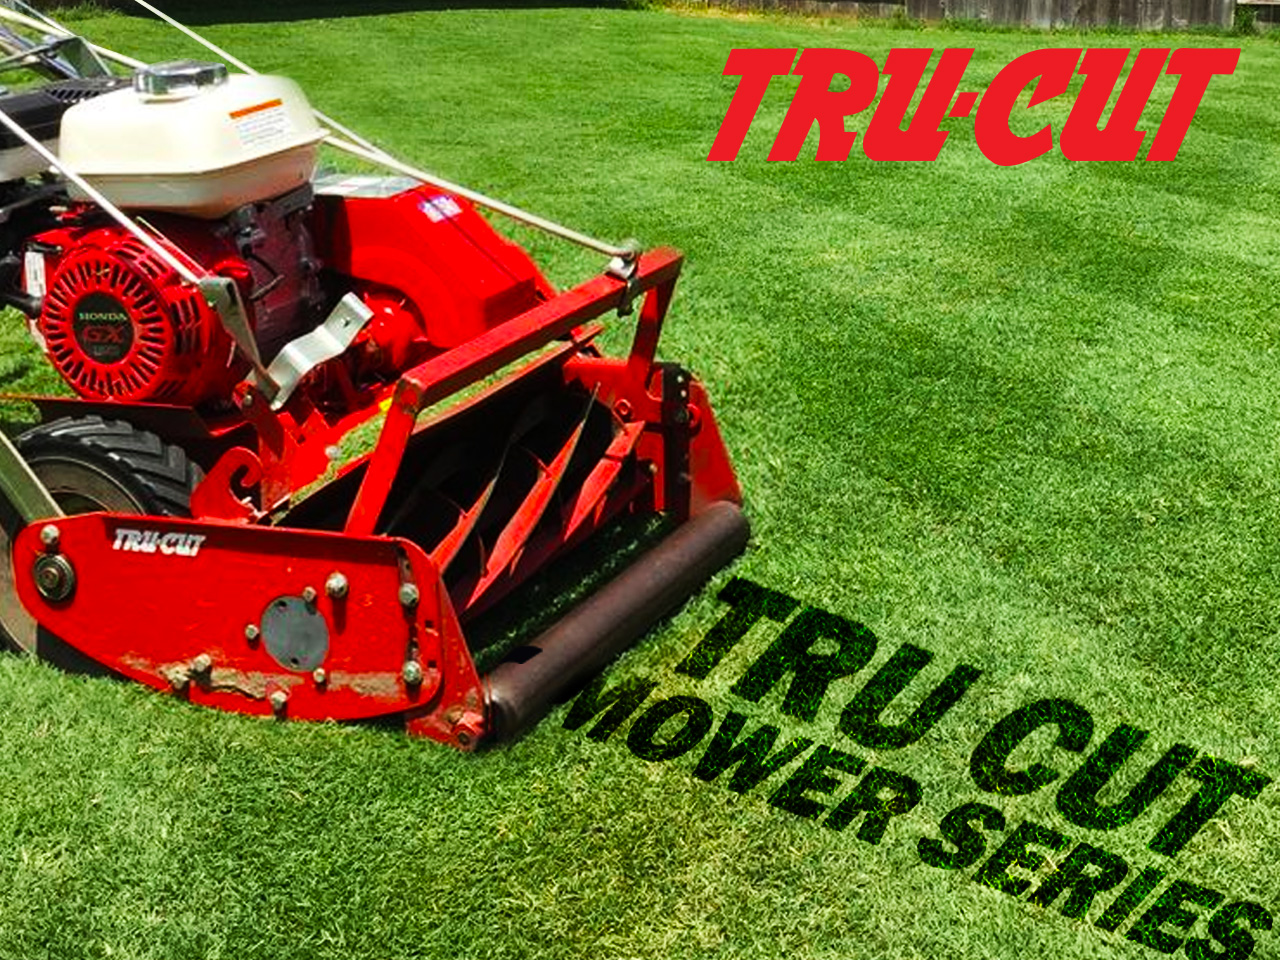 tru cut reel mower review